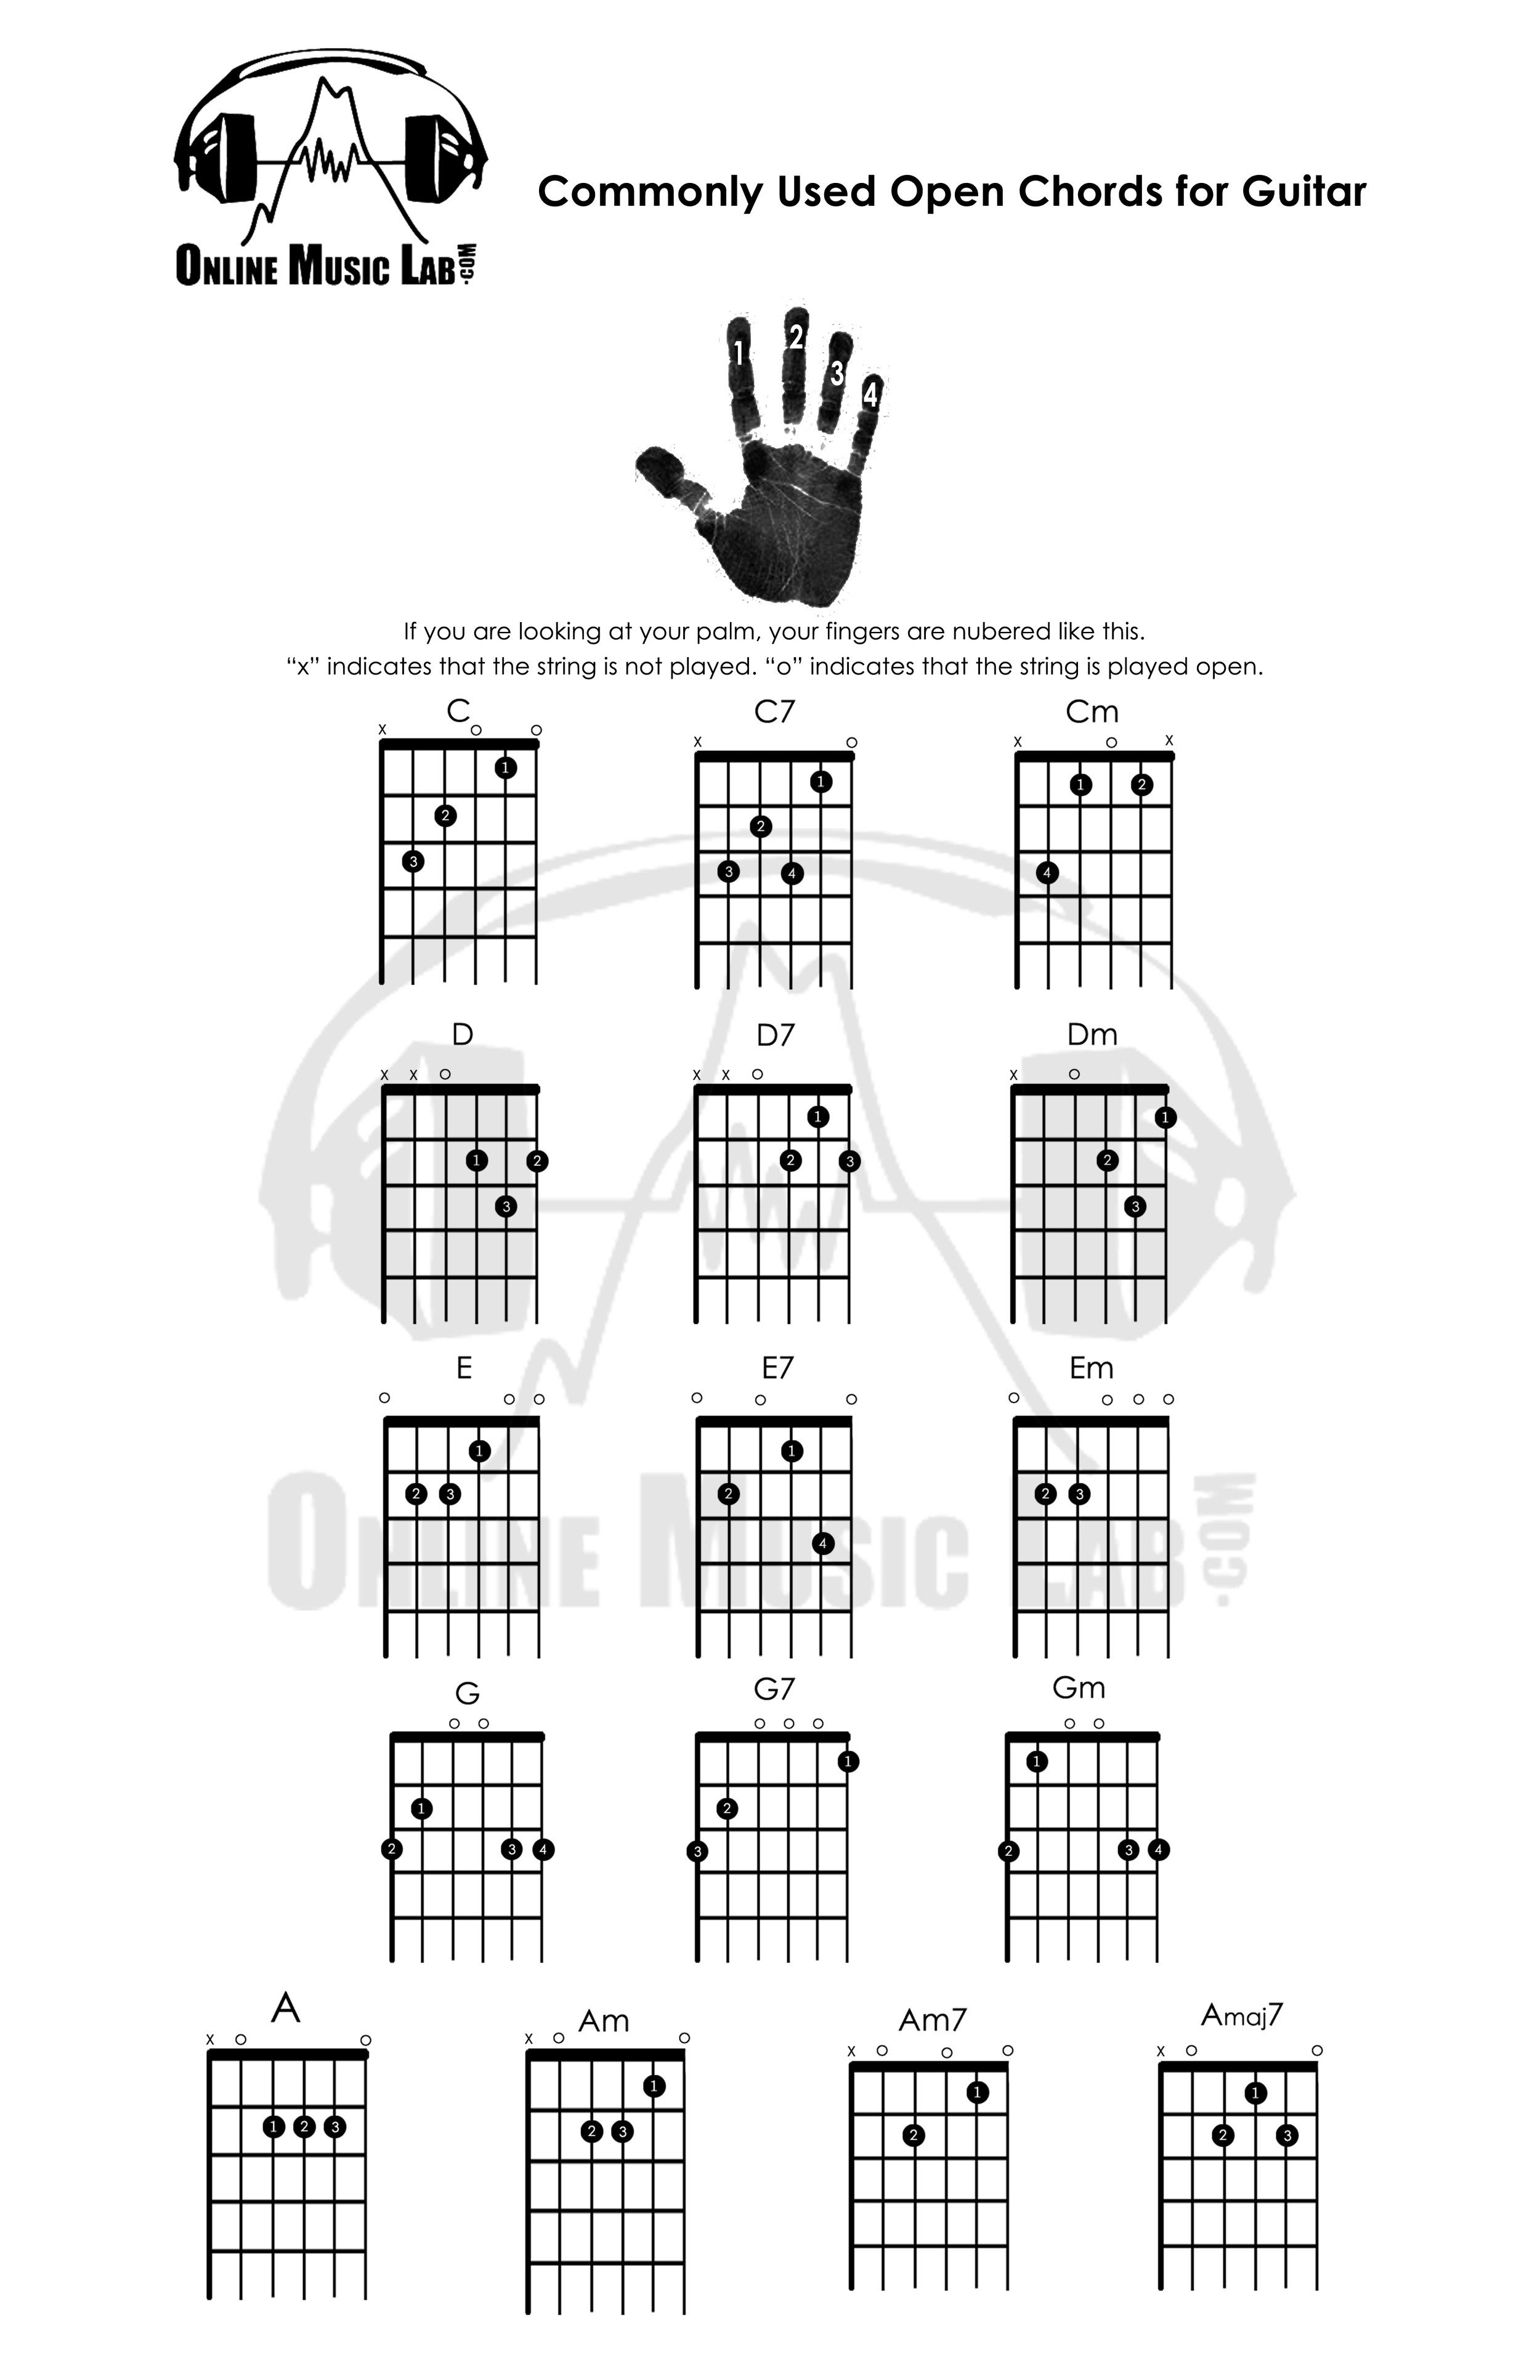 OML_Guitar Chord Chart.jpg